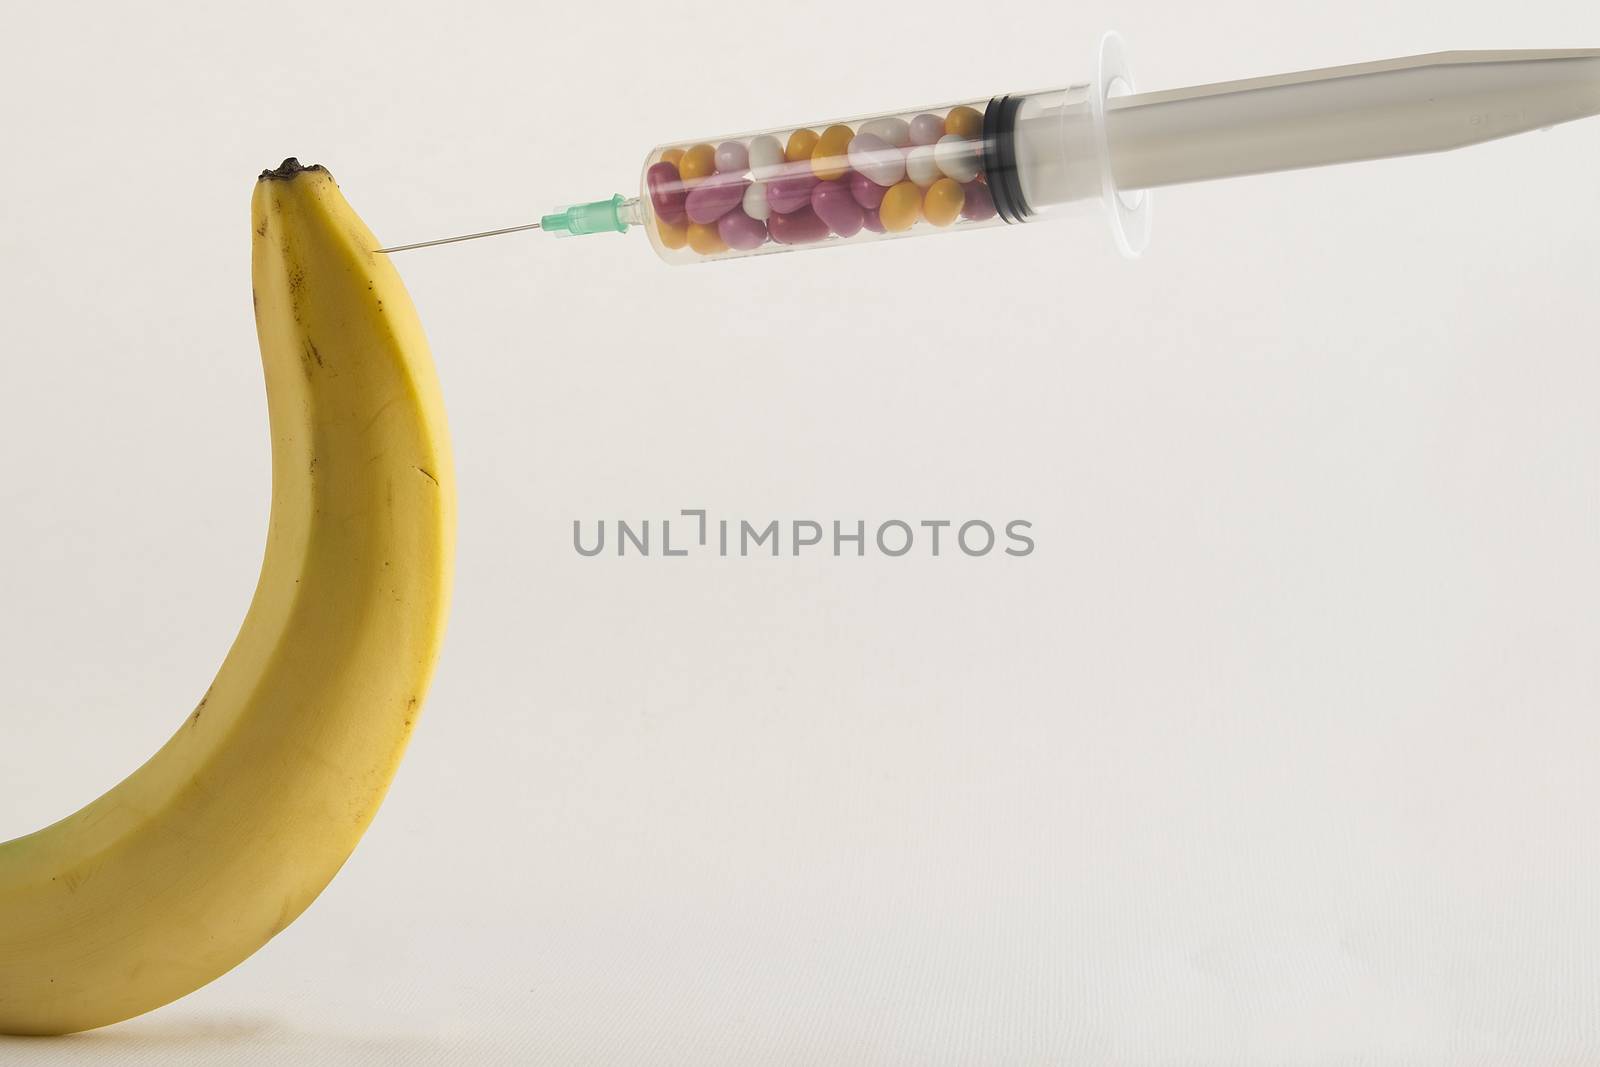 Male impotence metaphor: banana and syringe with pills